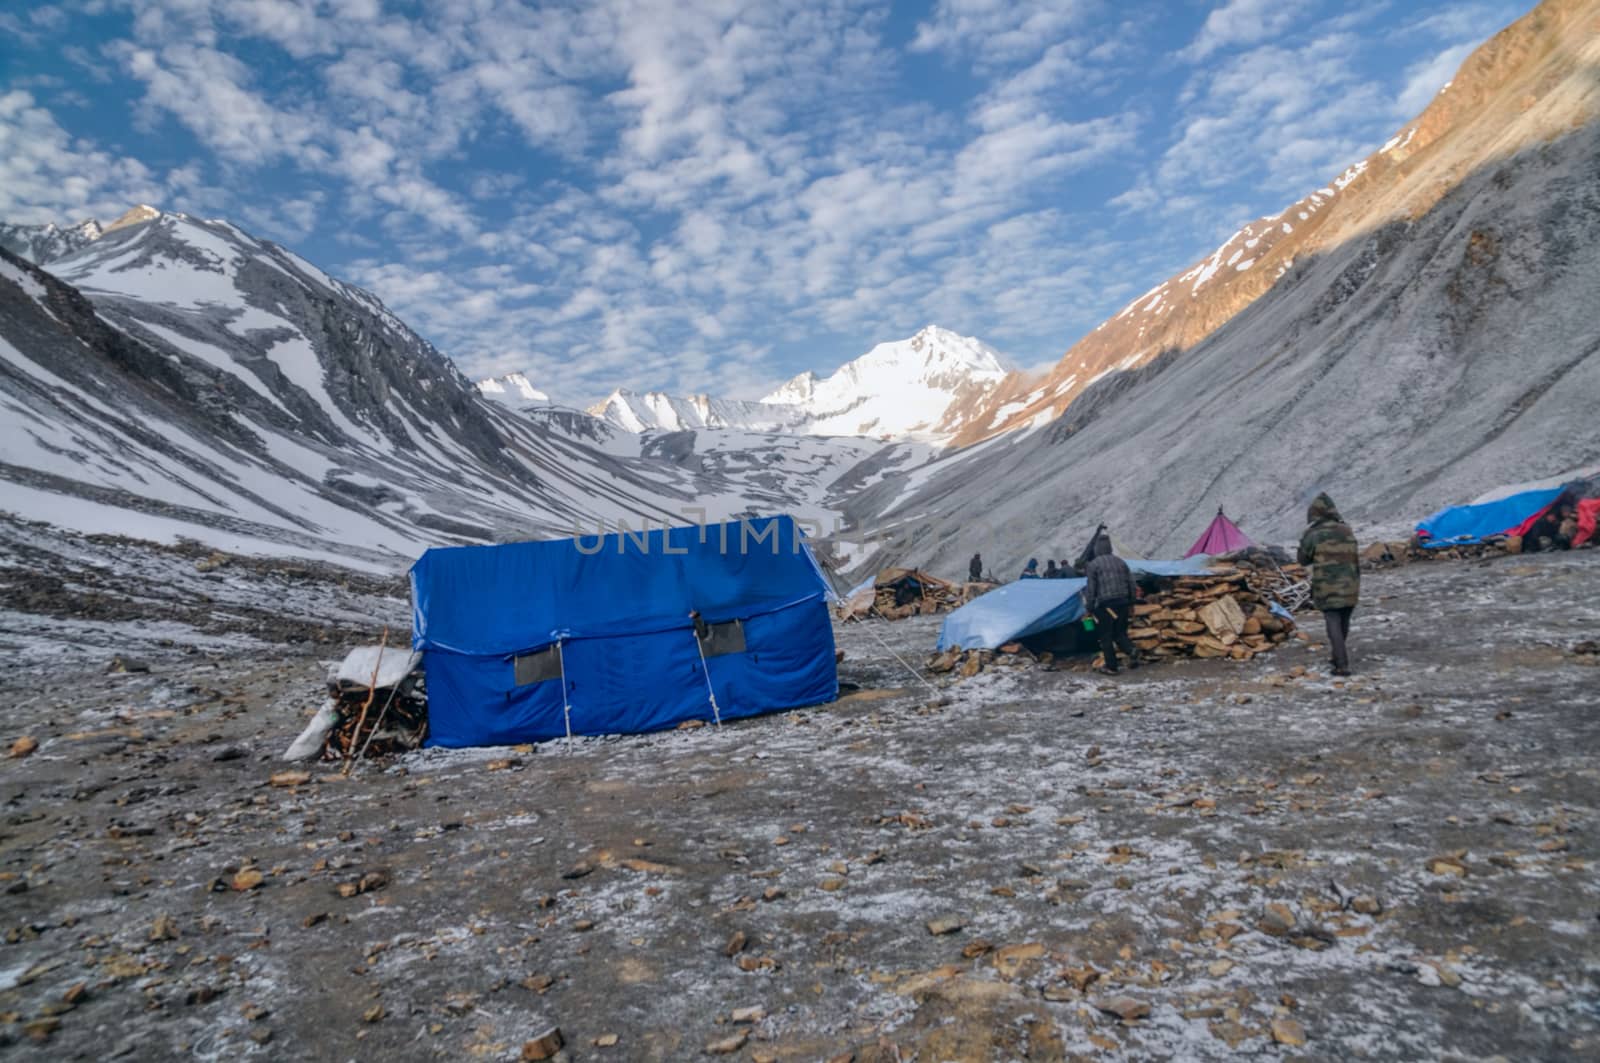 Base camp in Himalayas by MichalKnitl